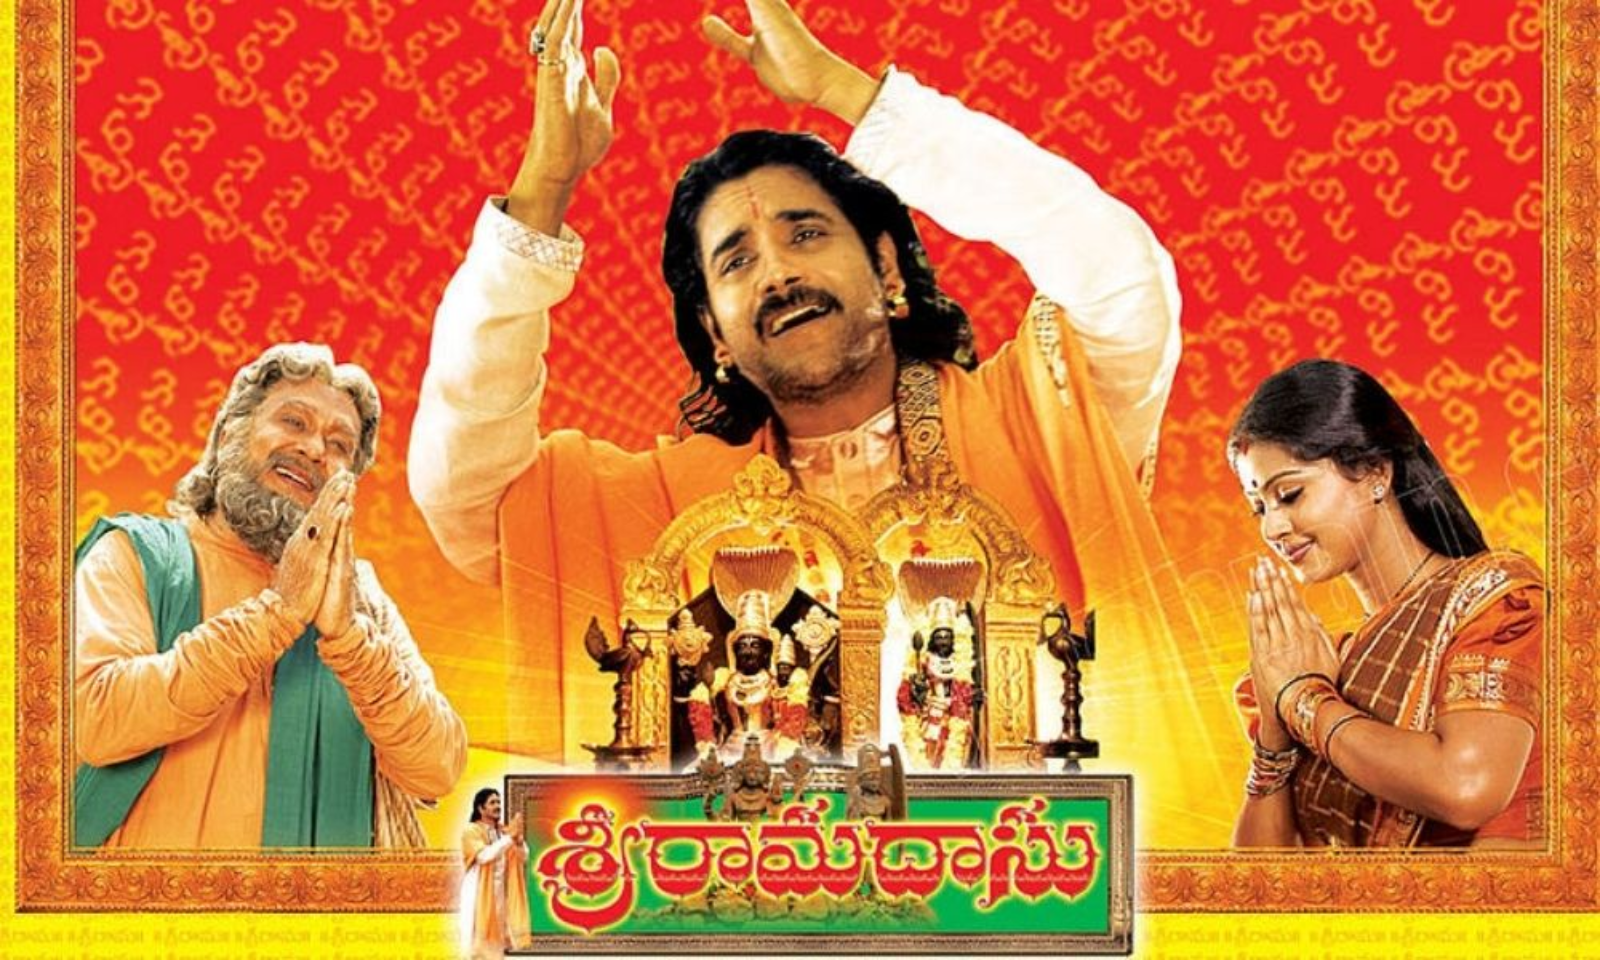 15 Years For Sri Ramadasu: 15 ఏళ్ల భక్తిరస కావ్యం &#39;శ్రీరామదాసు&#39; | 15 Years  for Nagarjuna&#39;s Devotional Entertainment &#39;Sri Ramadasu&#39; Movie